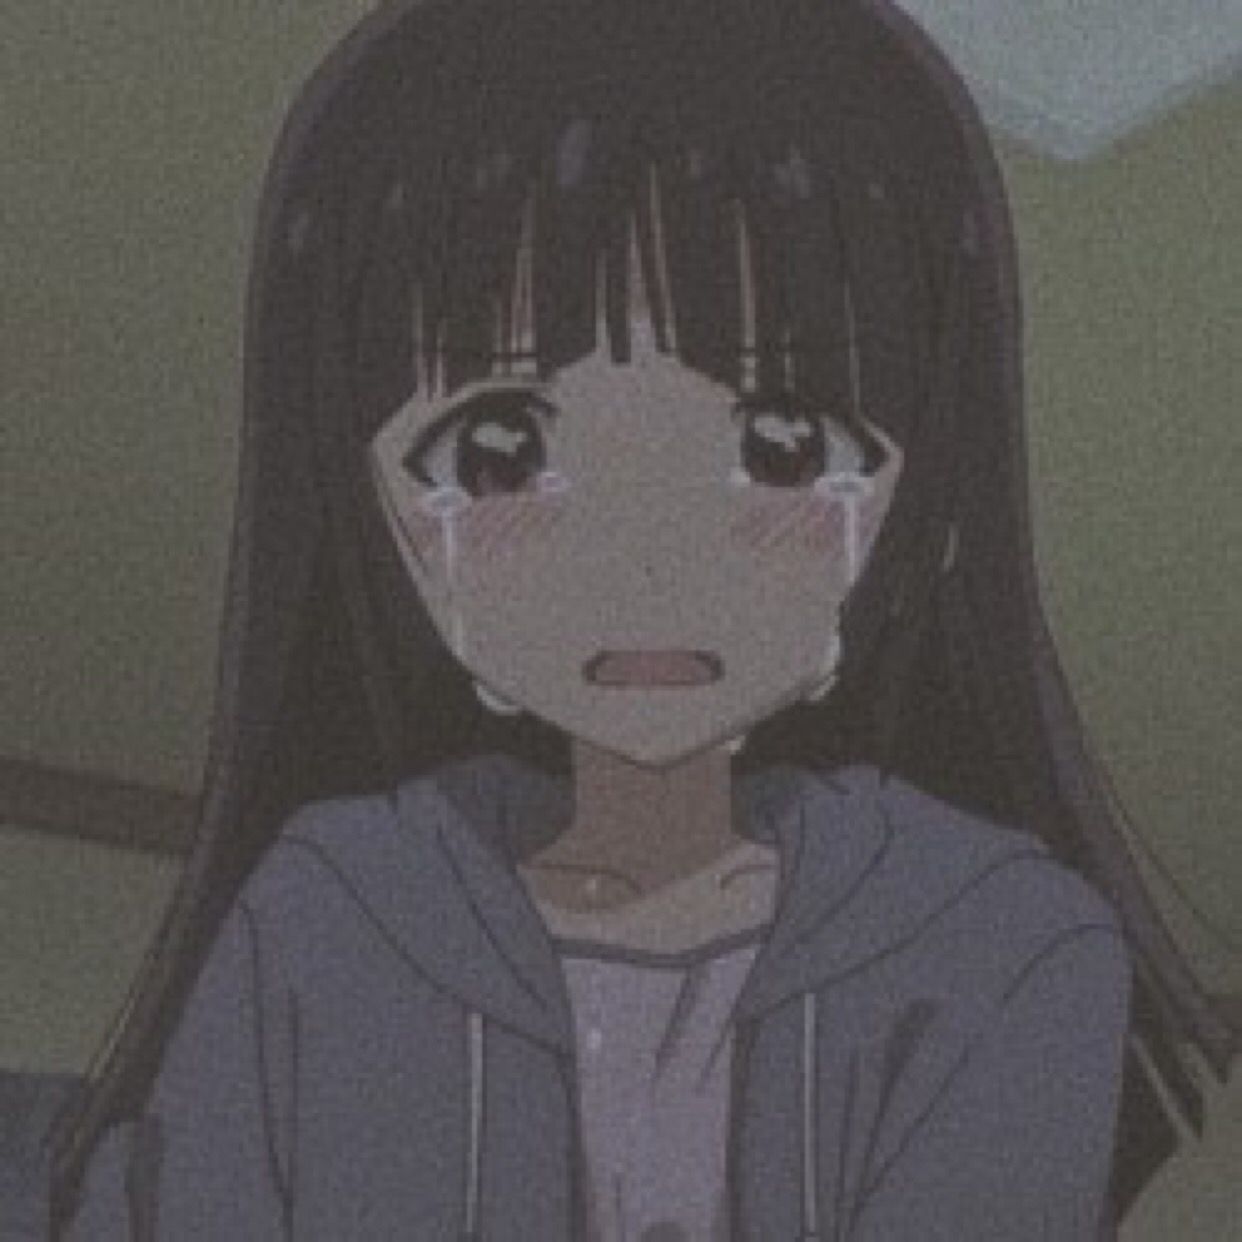 Depressed Anime Pfp Wallpapers